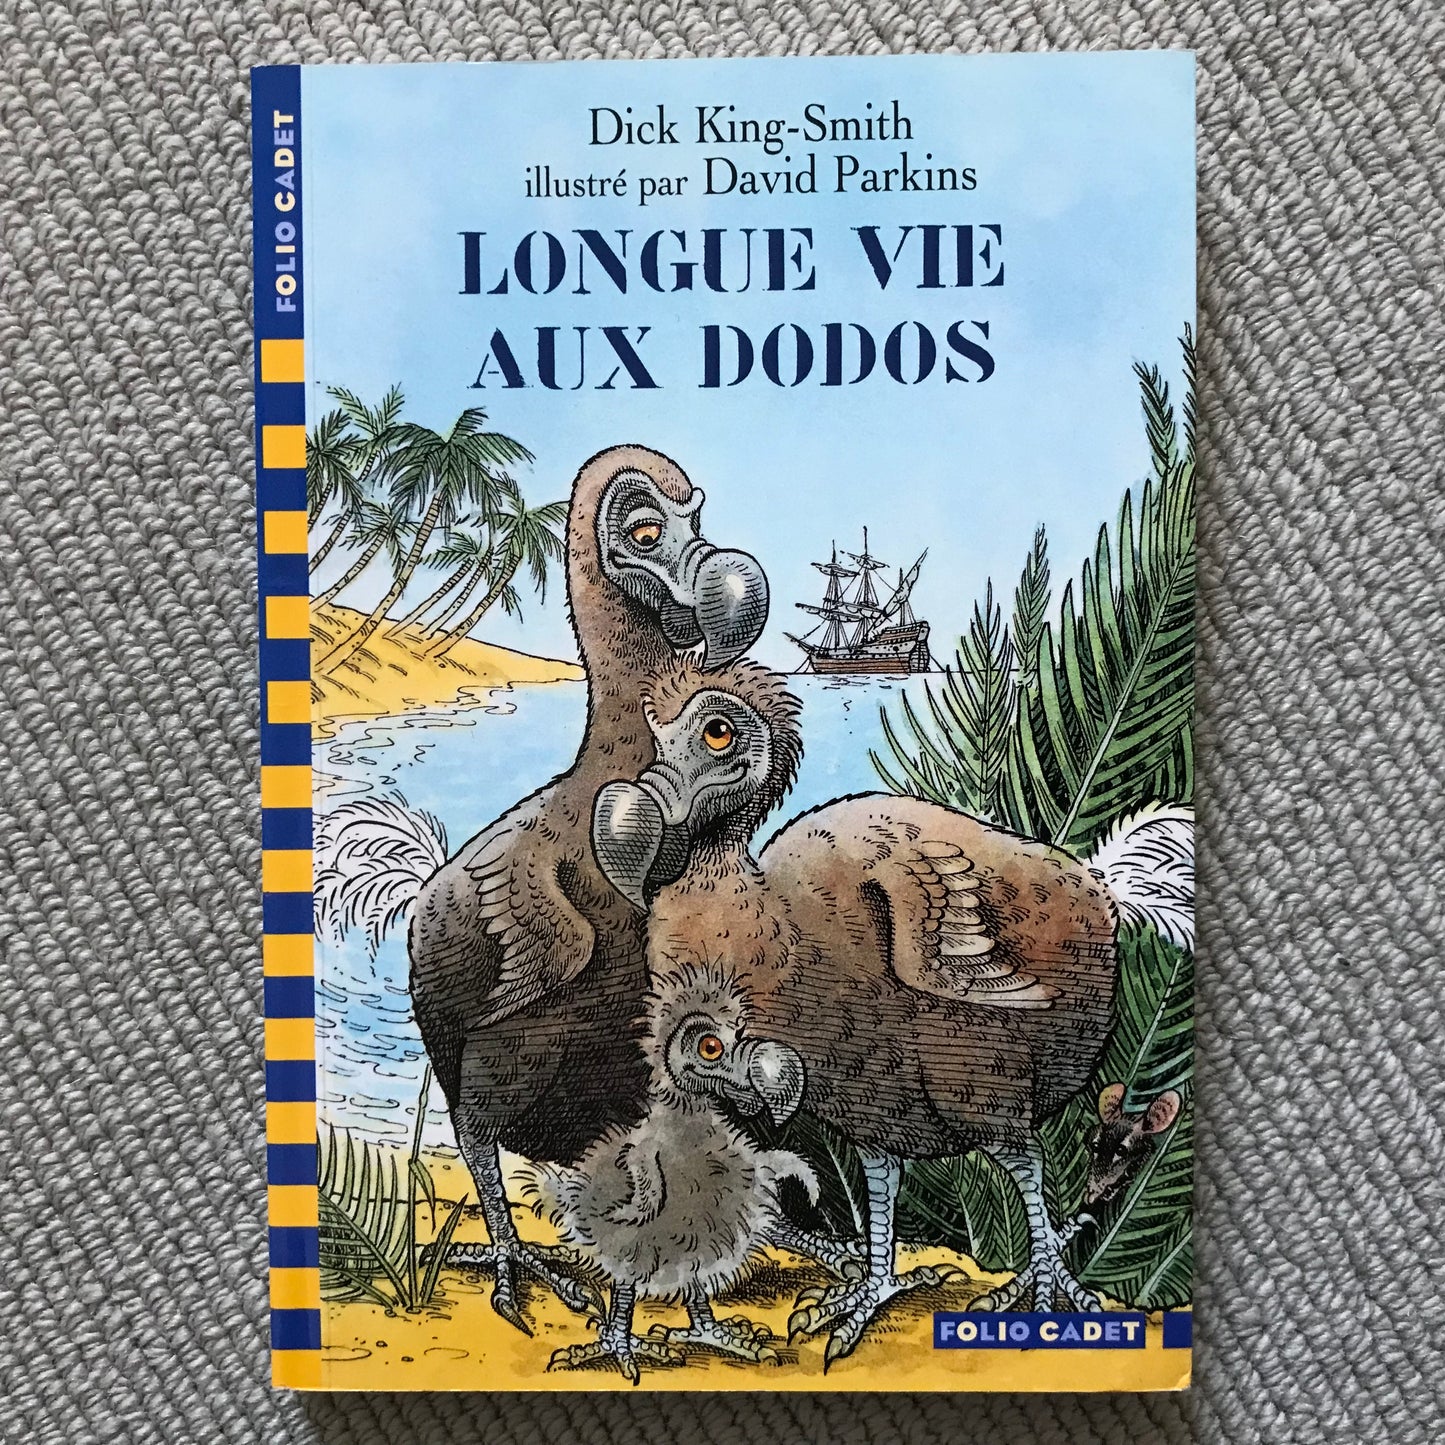 King-Smith, Dick - Longue vie aux dodos